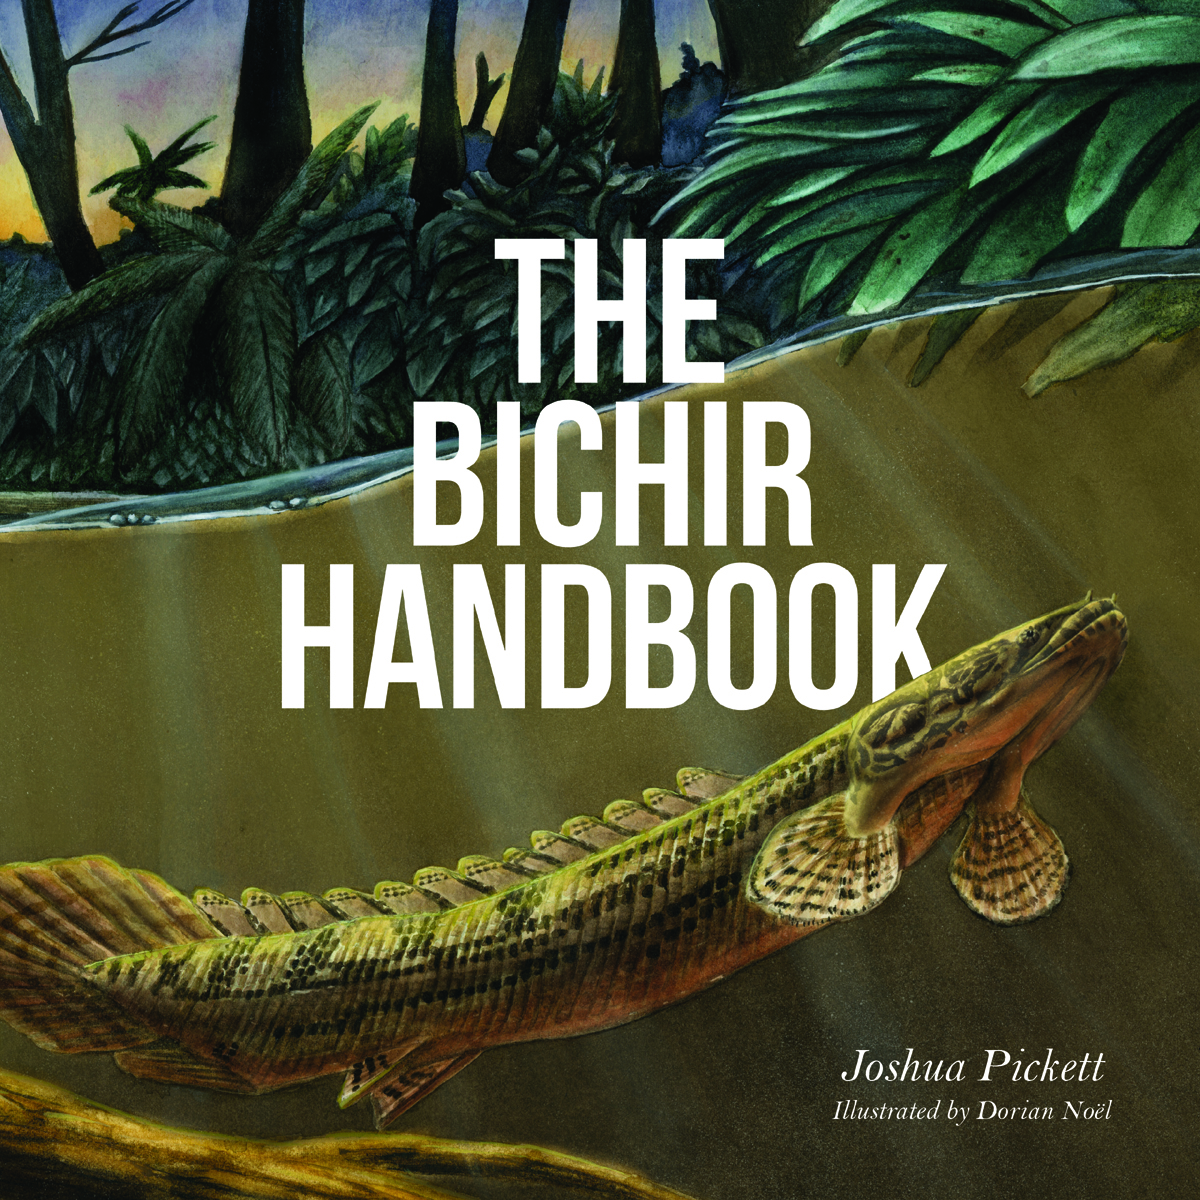 The bichir handbook [폴립테루스 핸드북]